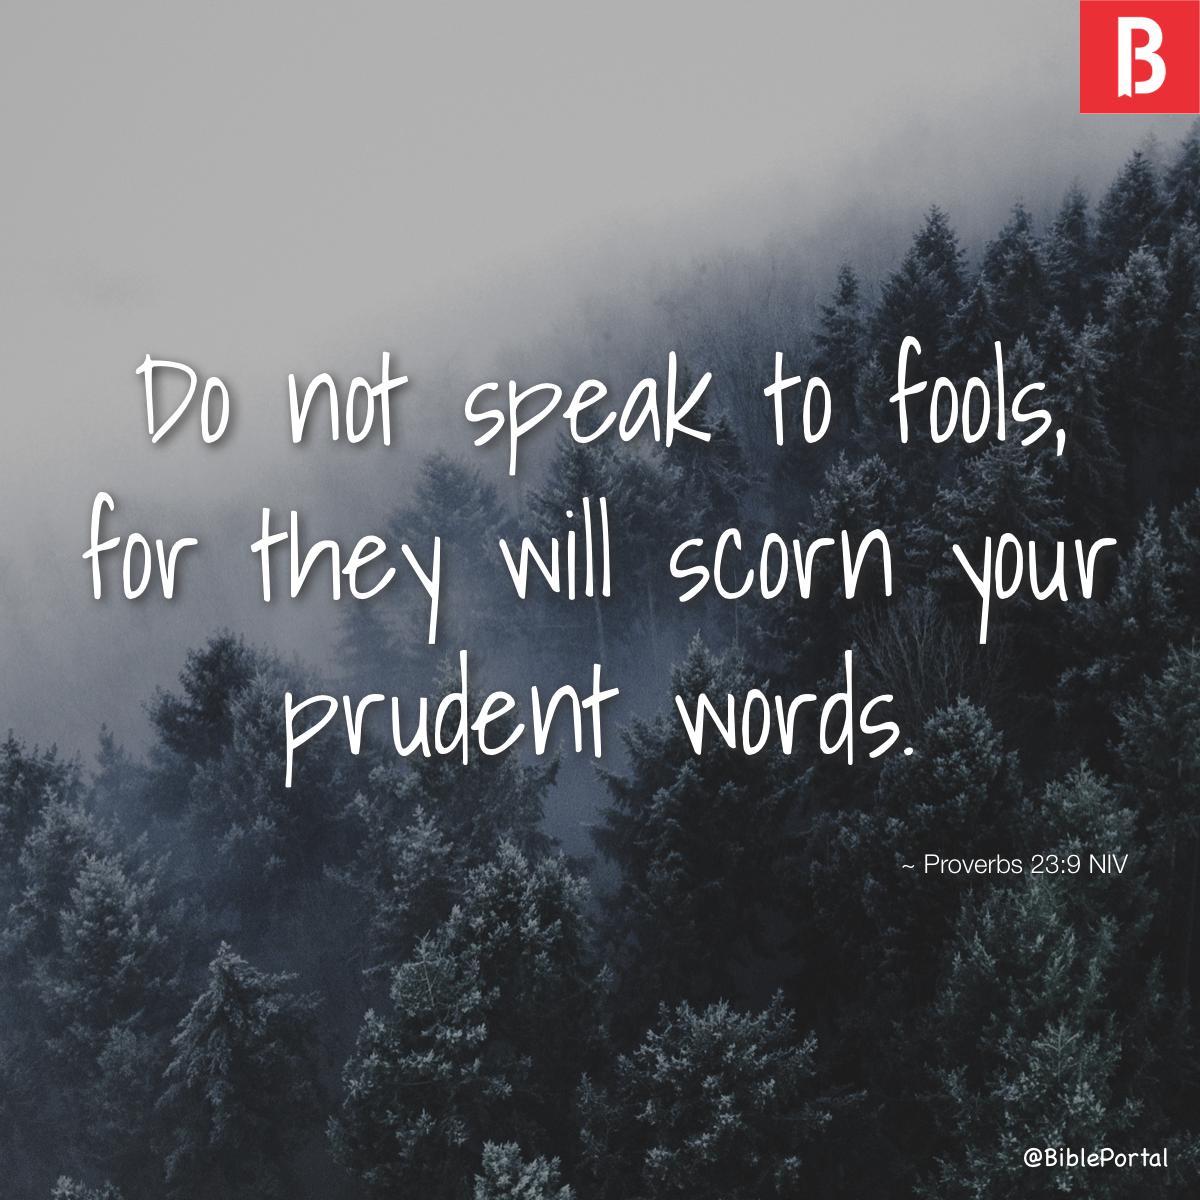 Proverbs 23:9 NIV